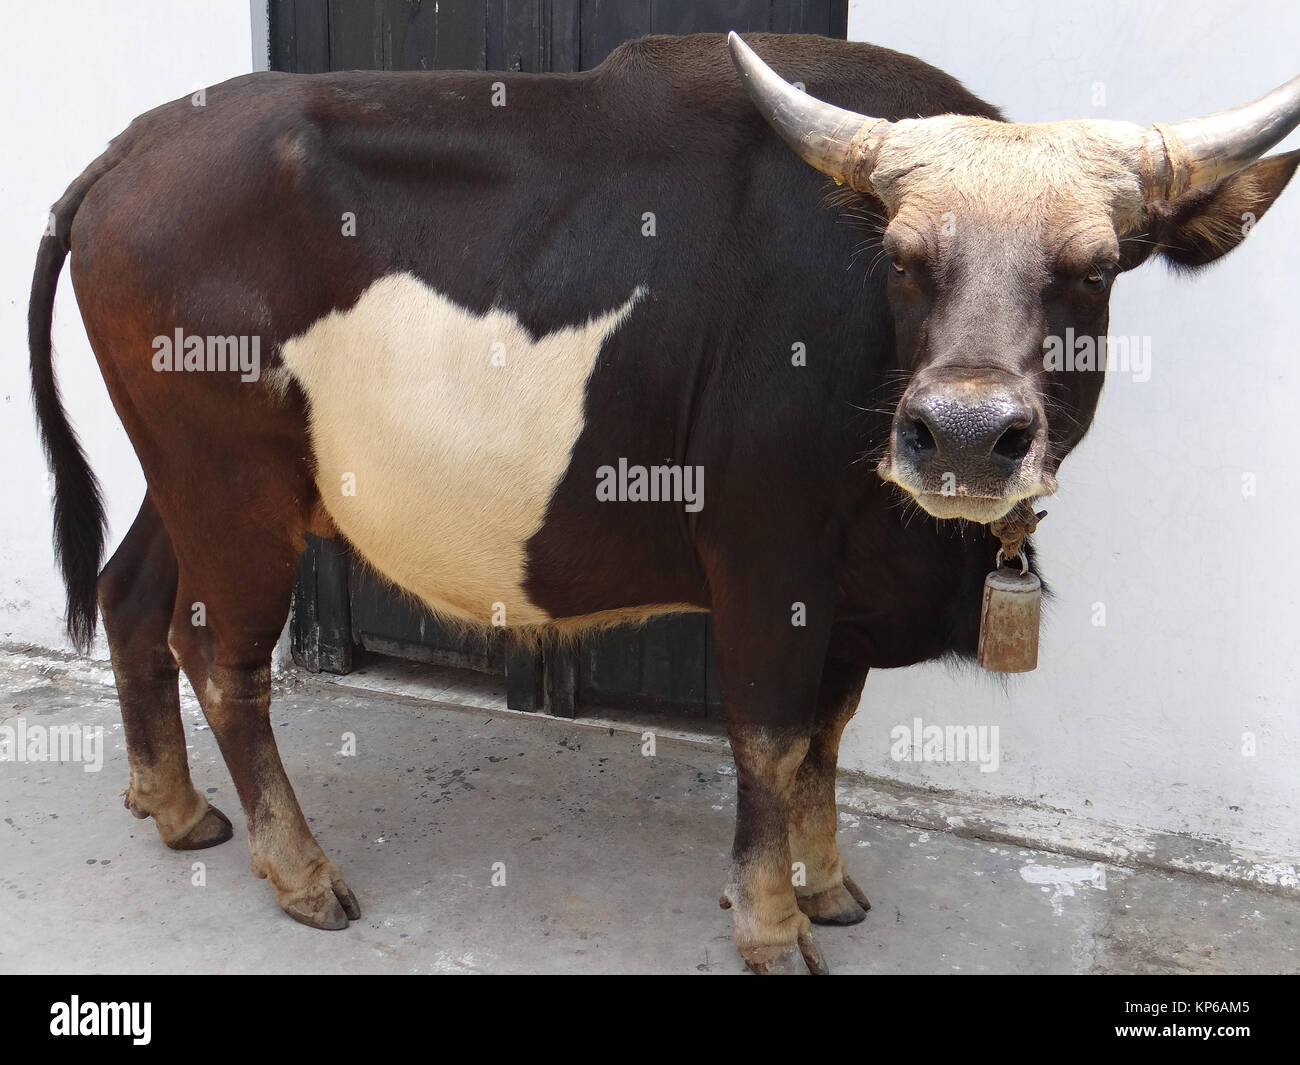 Mithun animal hi-res stock photography and images - Alamy